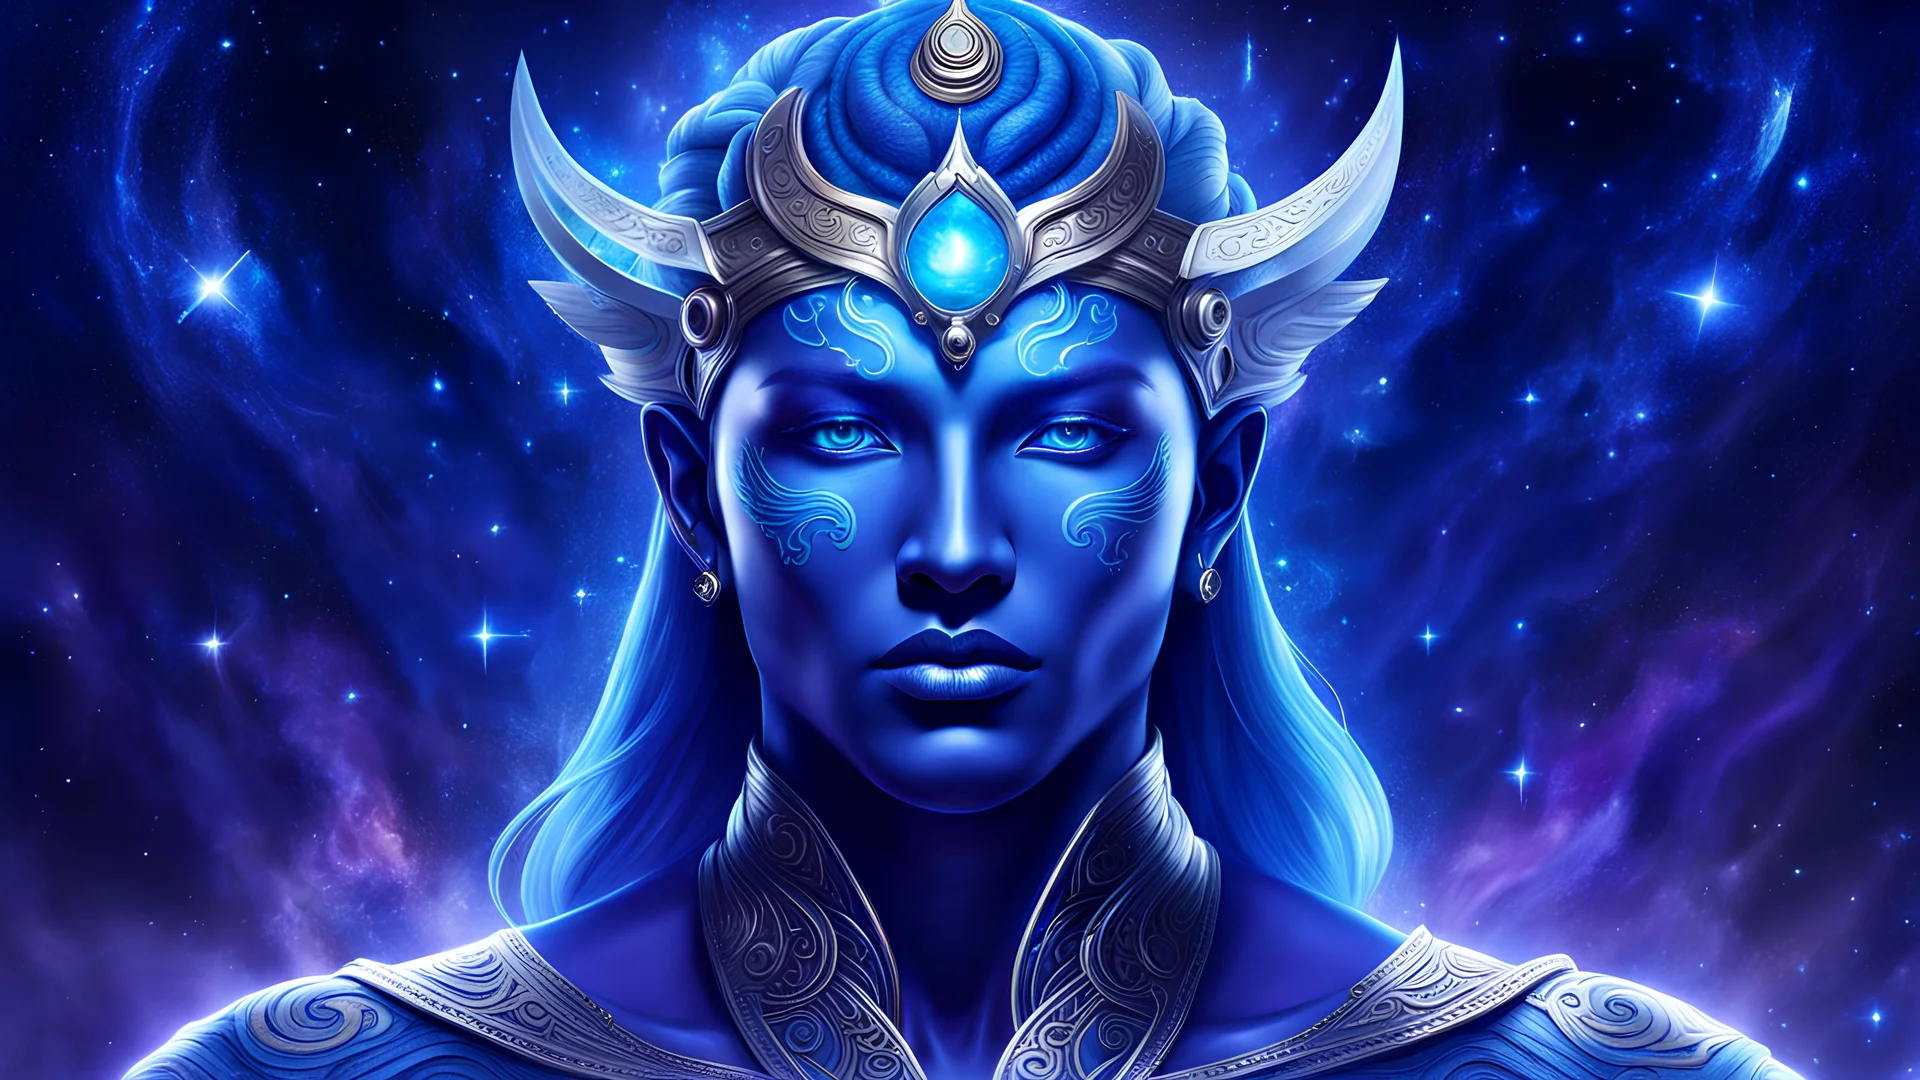 Full body portrait of a peaceful guardian God of the galaxies with a blue indigo purple skin, high skul, luminous eyes